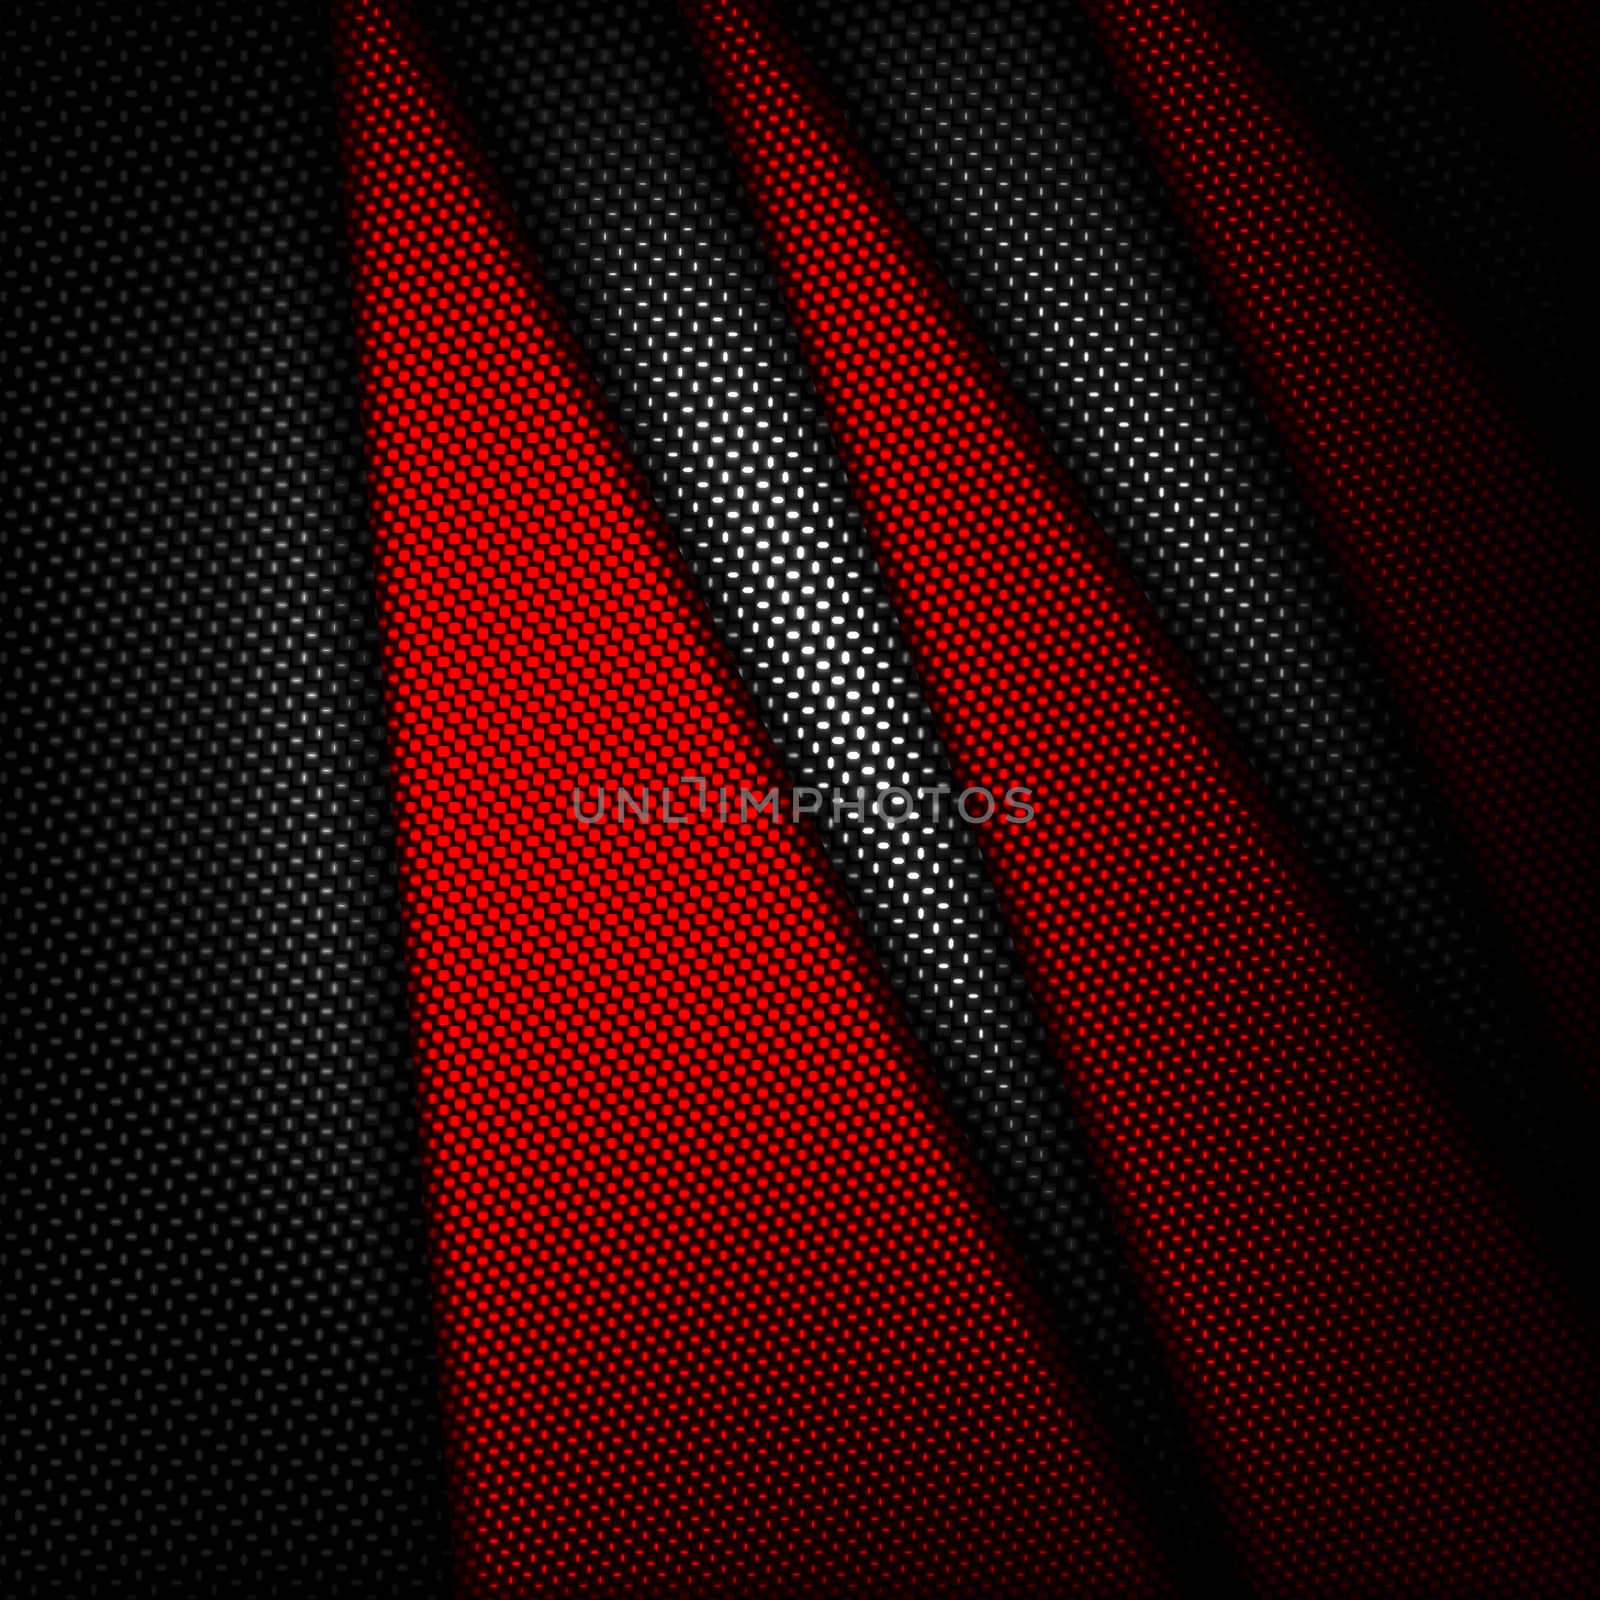 red and black carbon fiber background. 3d illustration material design. racing style.